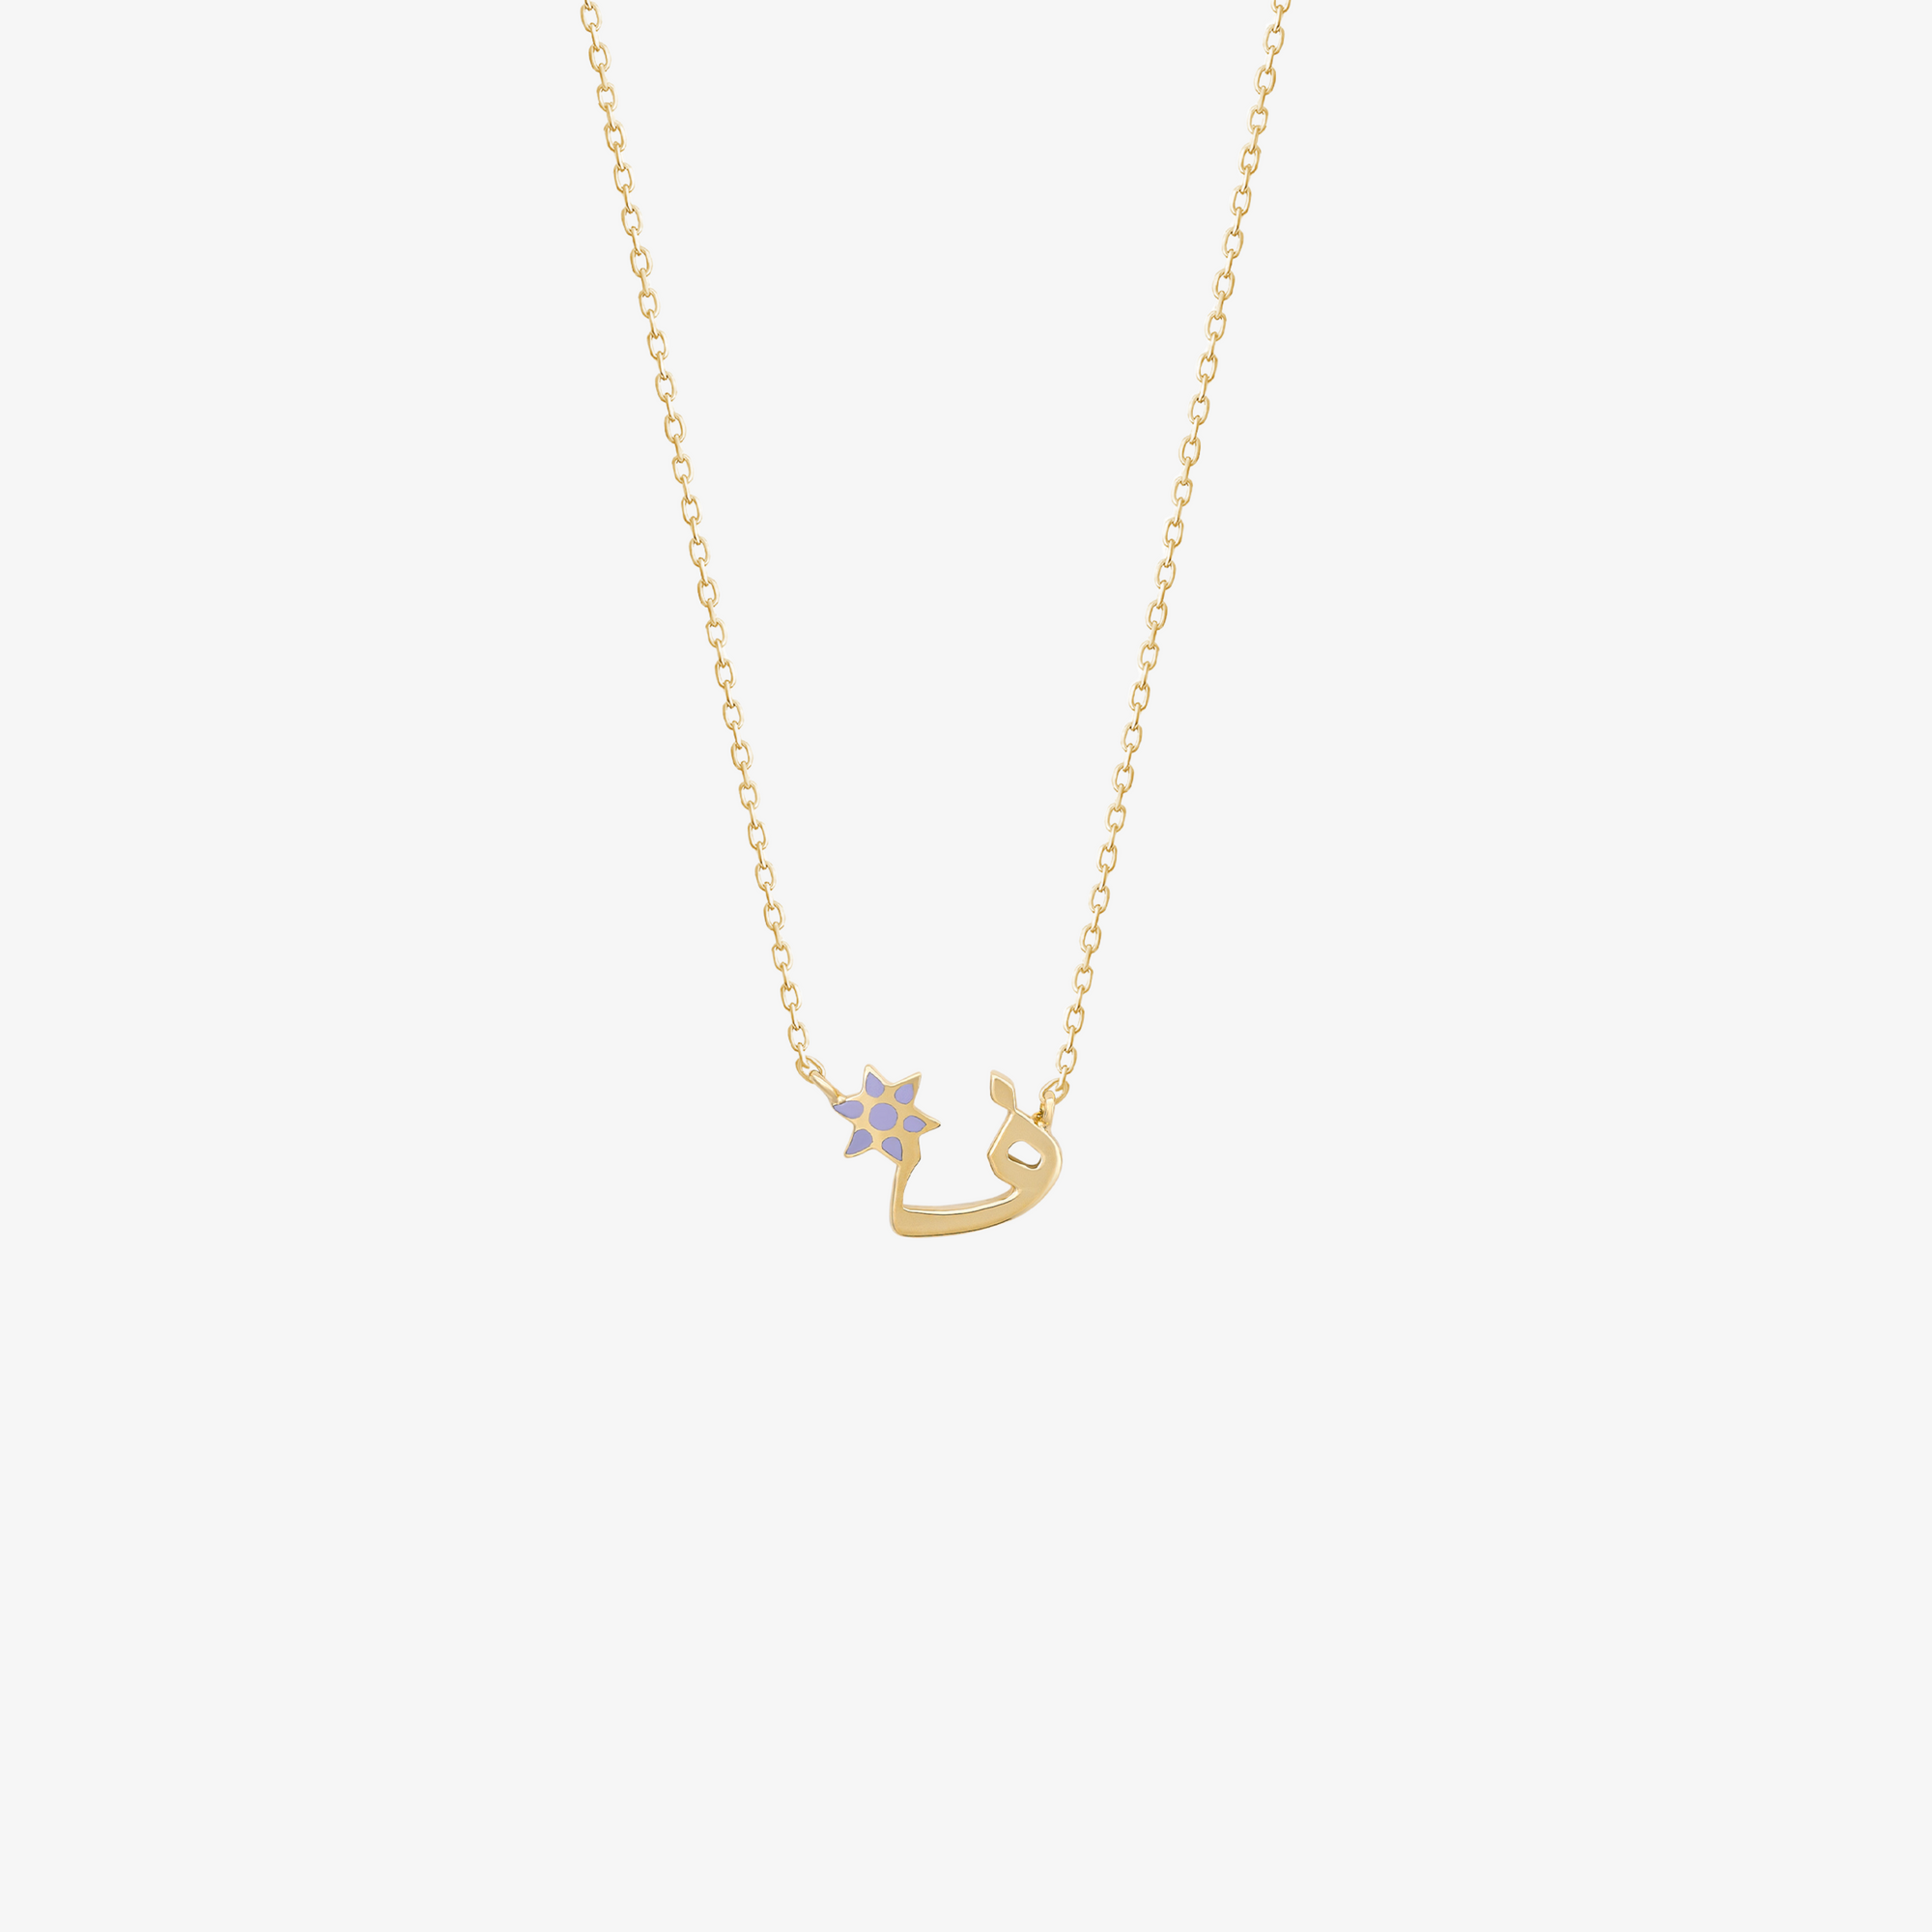 TINY BLING - 18K Gold, Enamel & Charm Letter Necklace